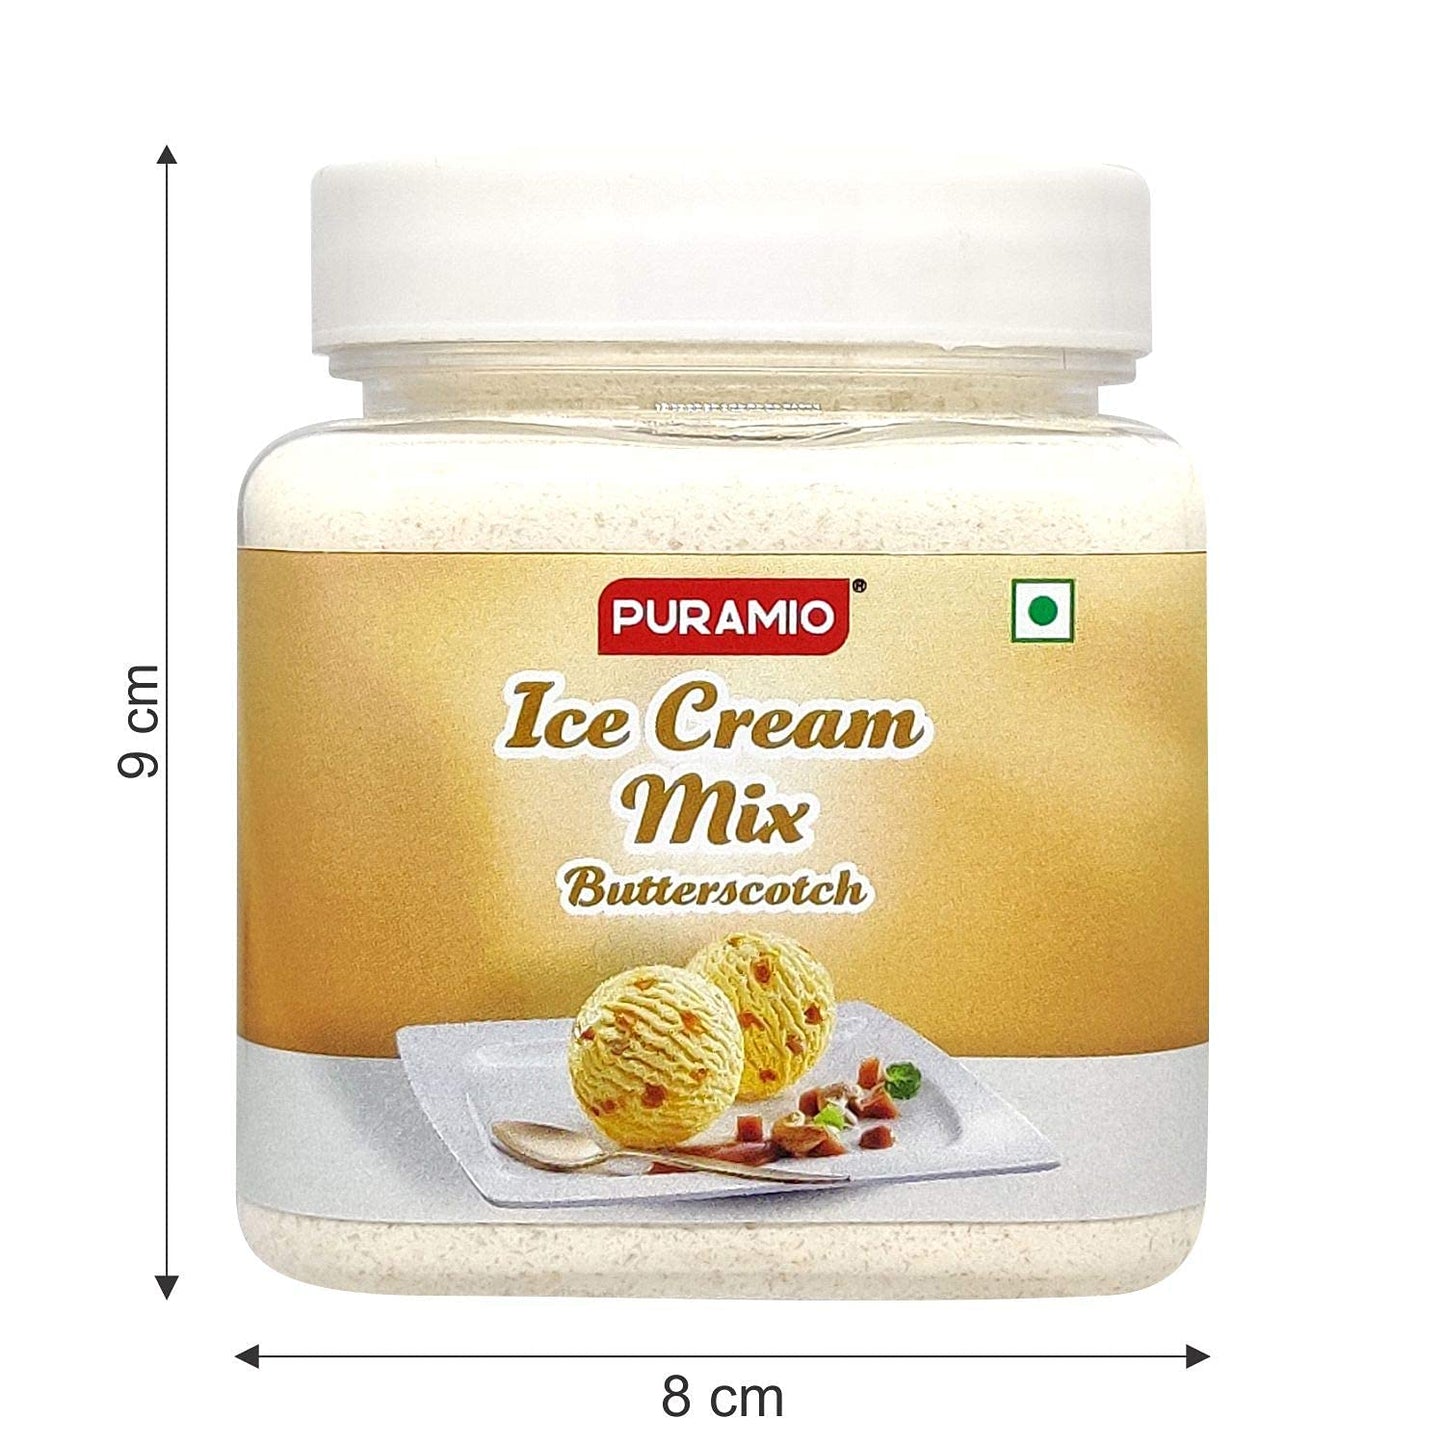 PURAMIO Combo Pack of- Icecream Mix (Butterscotch) - 250g & Butterscotch Nuts - 50g